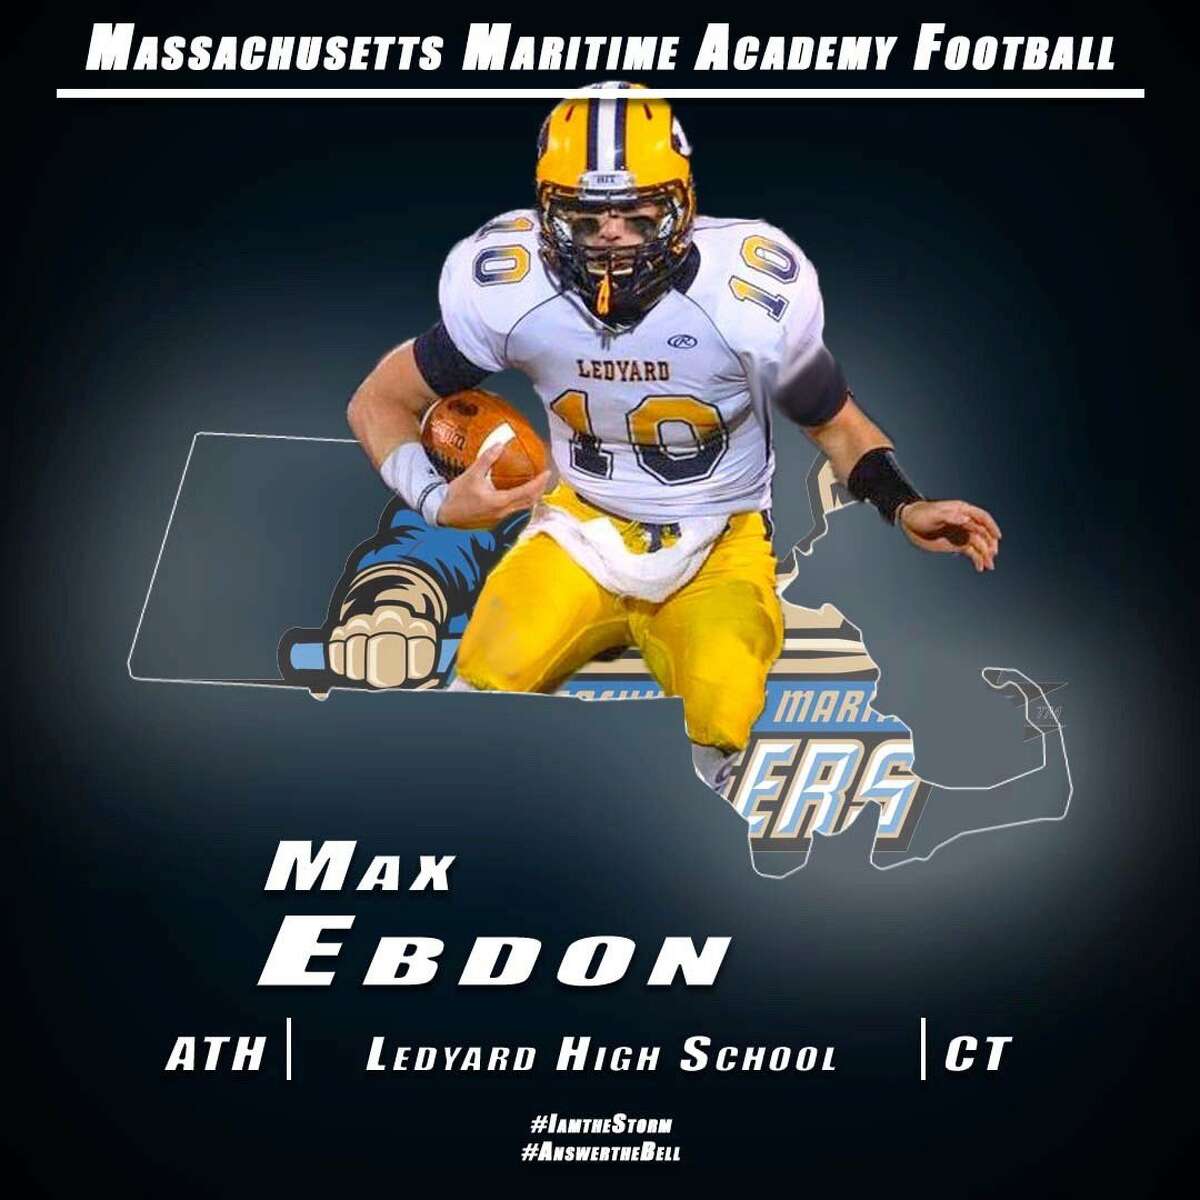 Mass Maritime signing card for Ledyard quarterback Max Ebdon.